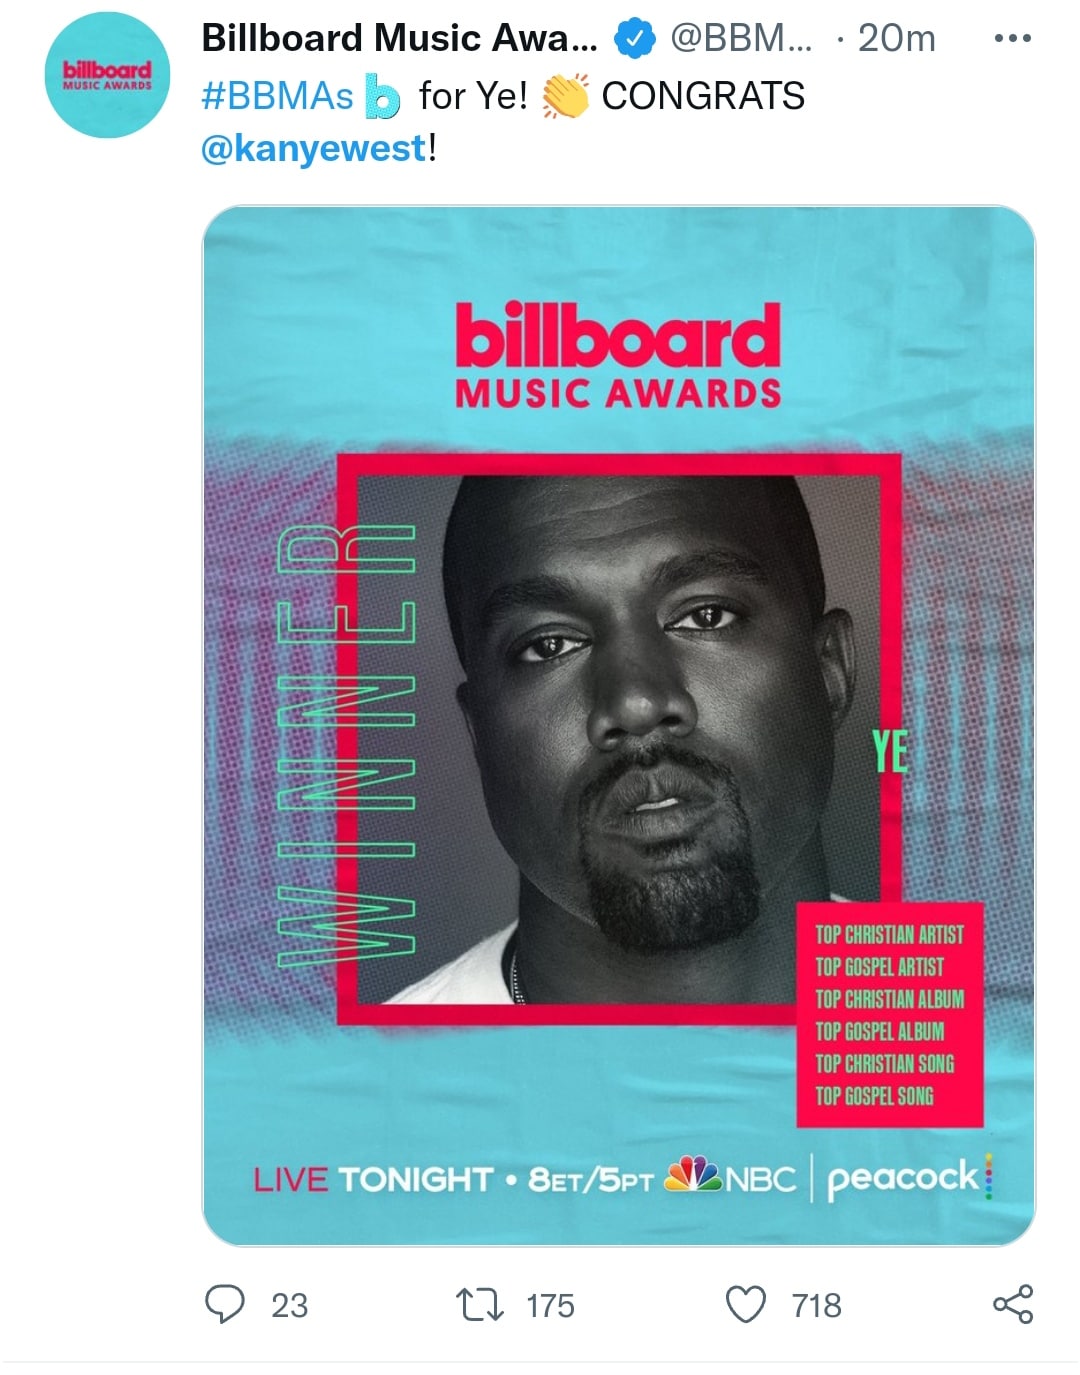 Kanye West wins Top Gospel Artist 